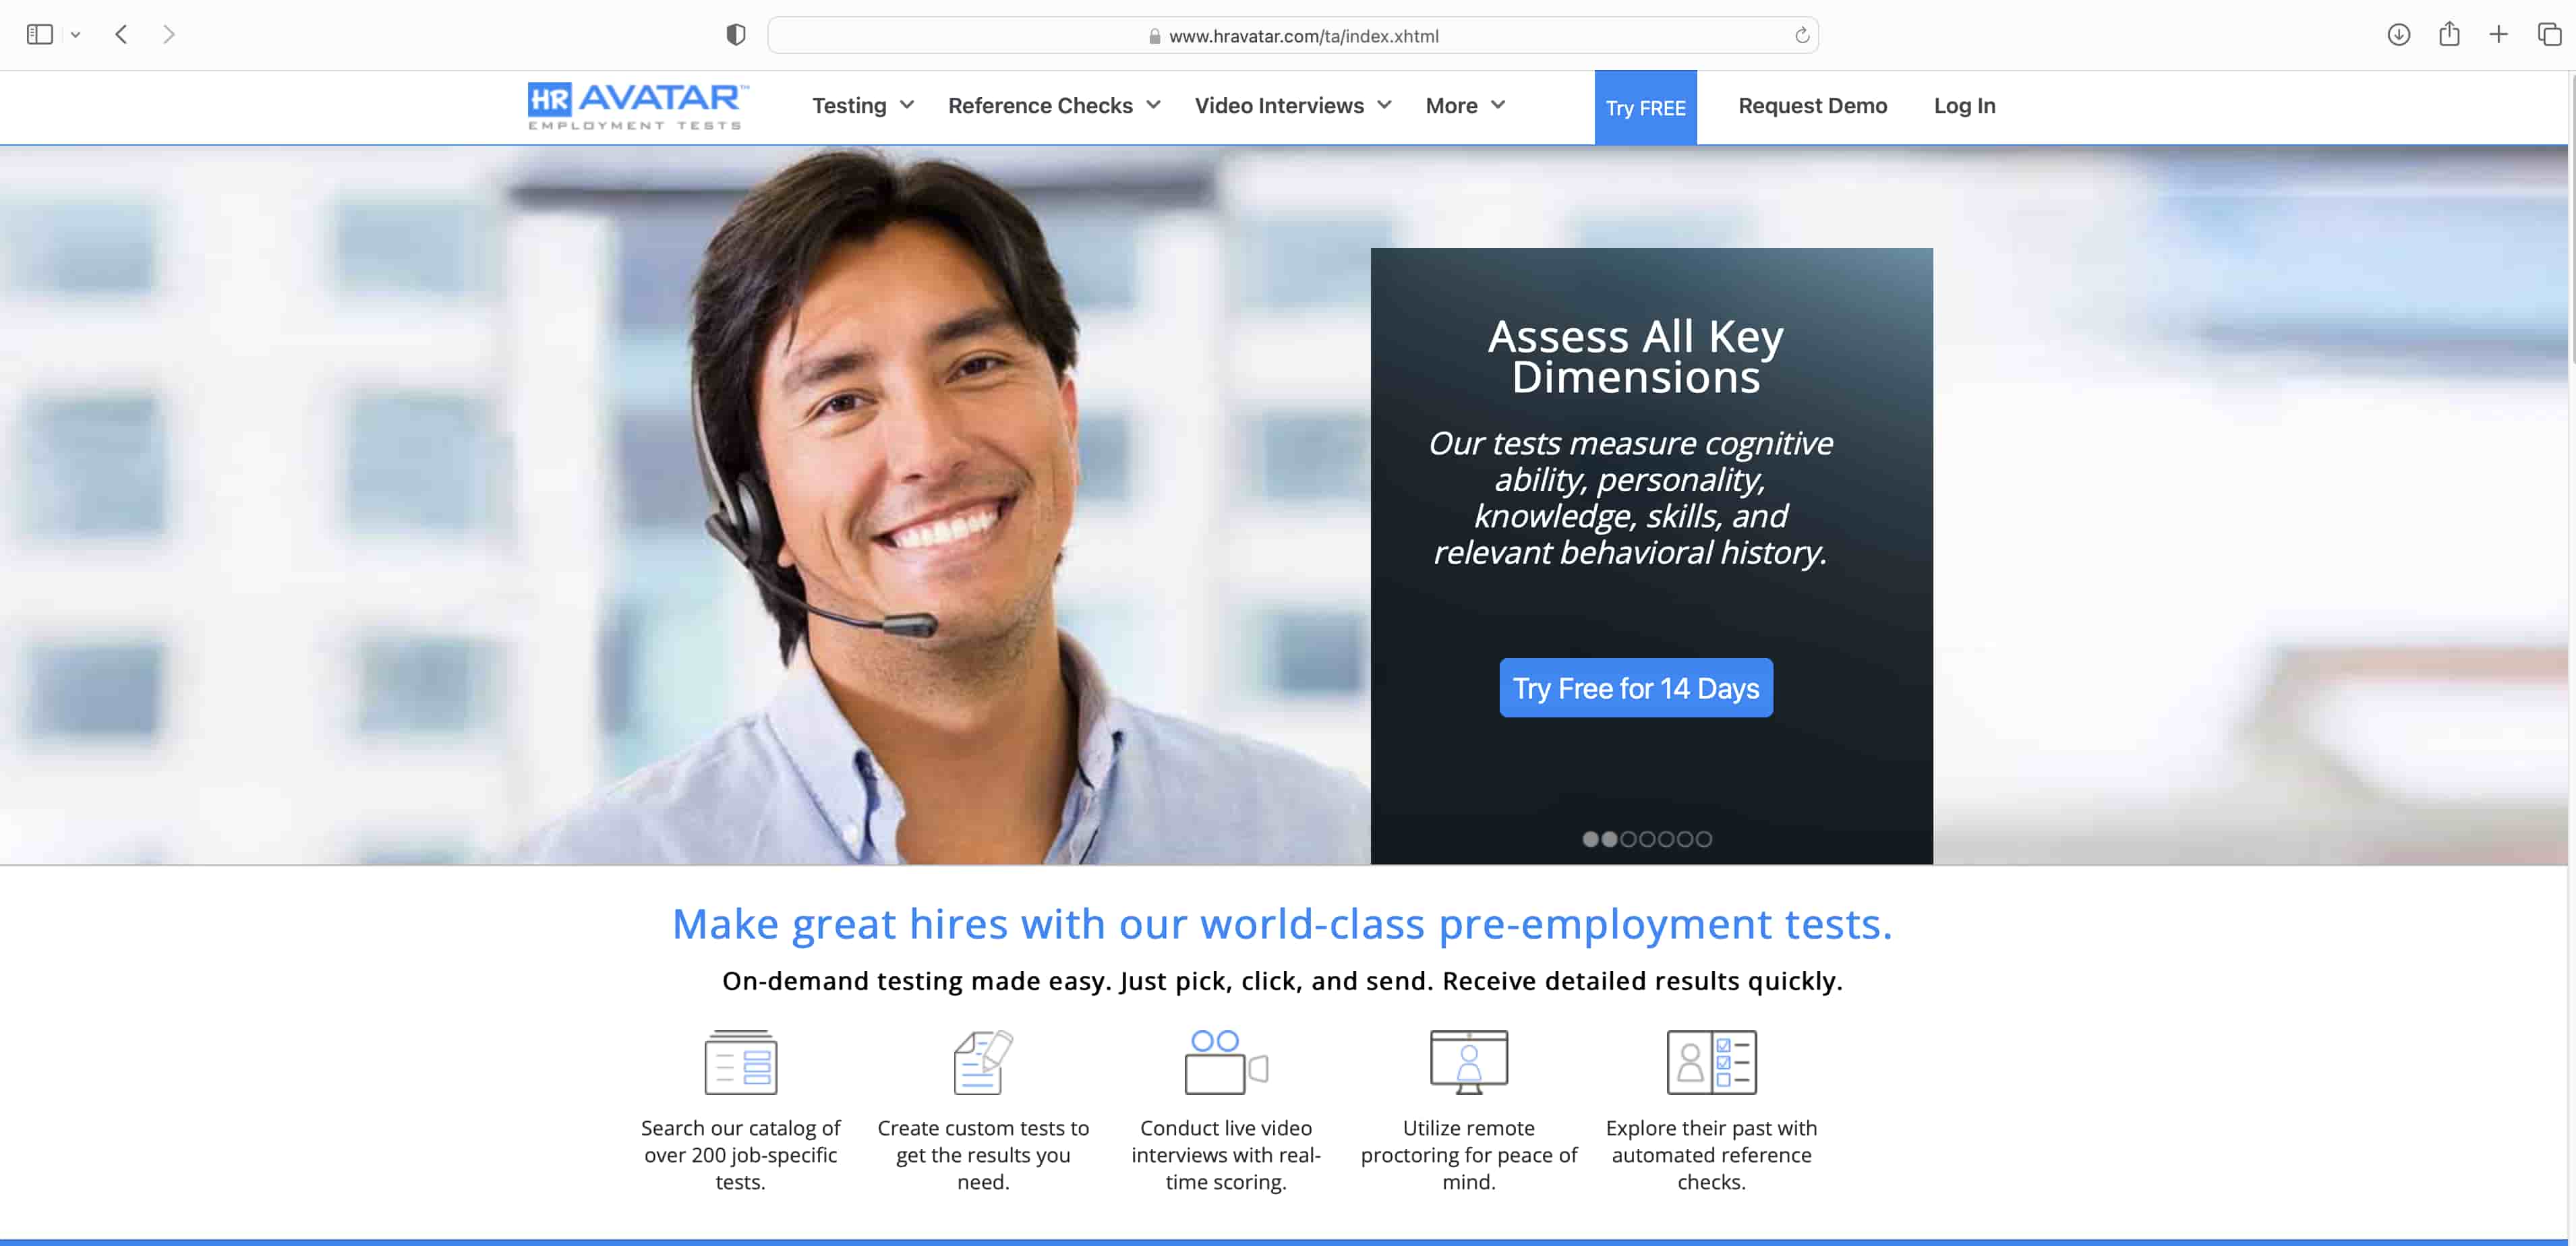 HR avatar screenshot